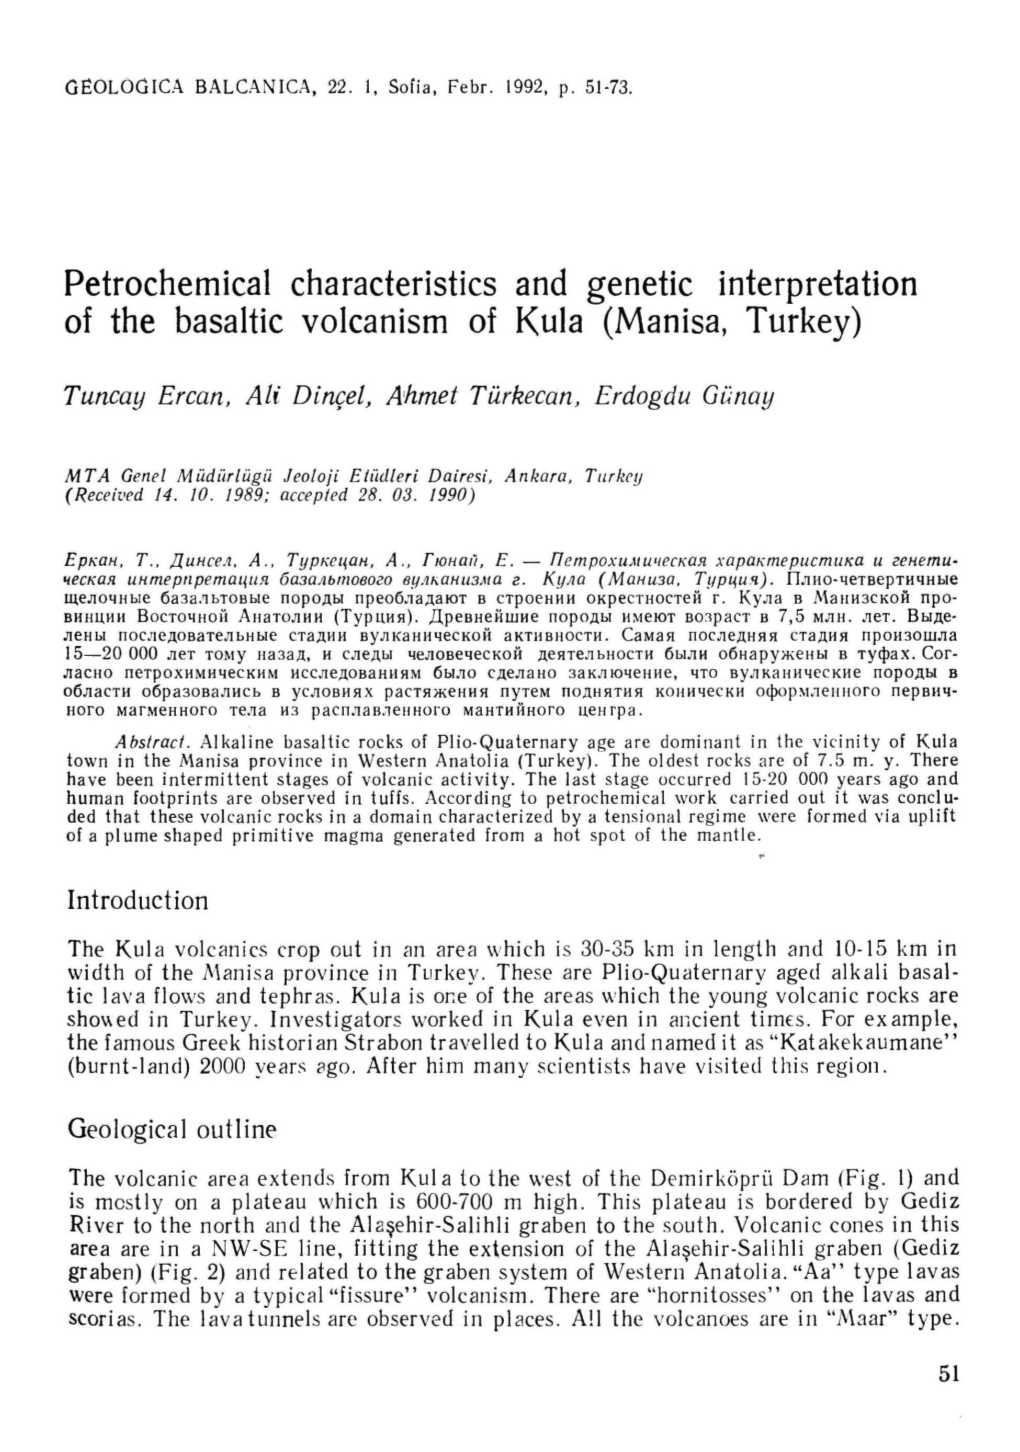 Petrochemical Characteristics and Genetic Interpretation of the Basaltic Volcanism of Kula (Manisa, Turkey)